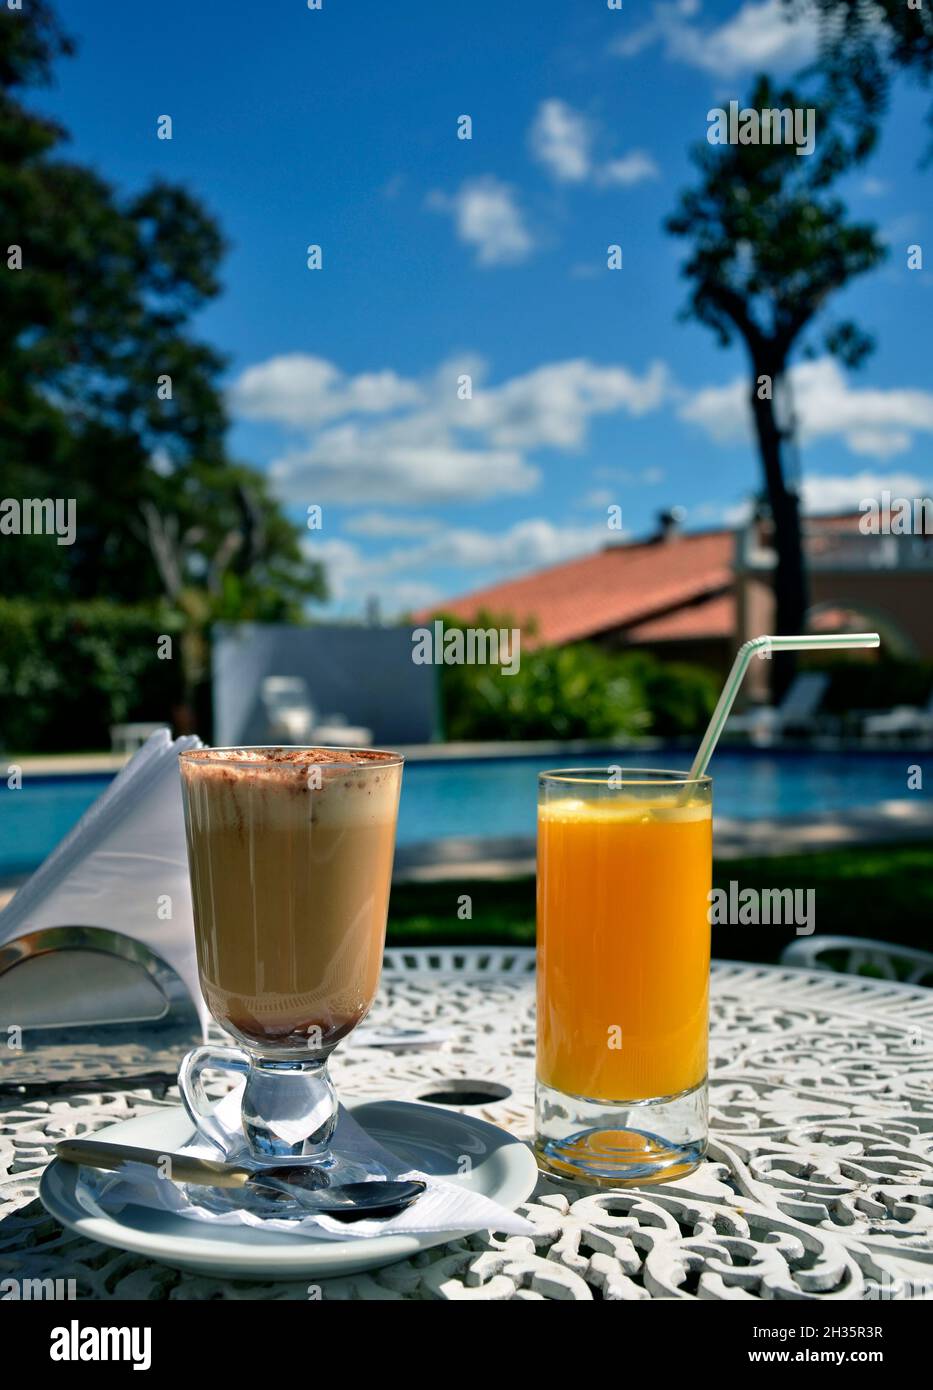 Frühstück in der Nähe des Pools, mit einem Cappuccino und Orangensaft. Petit déjeuner au Bord de la piscine. Stockfoto